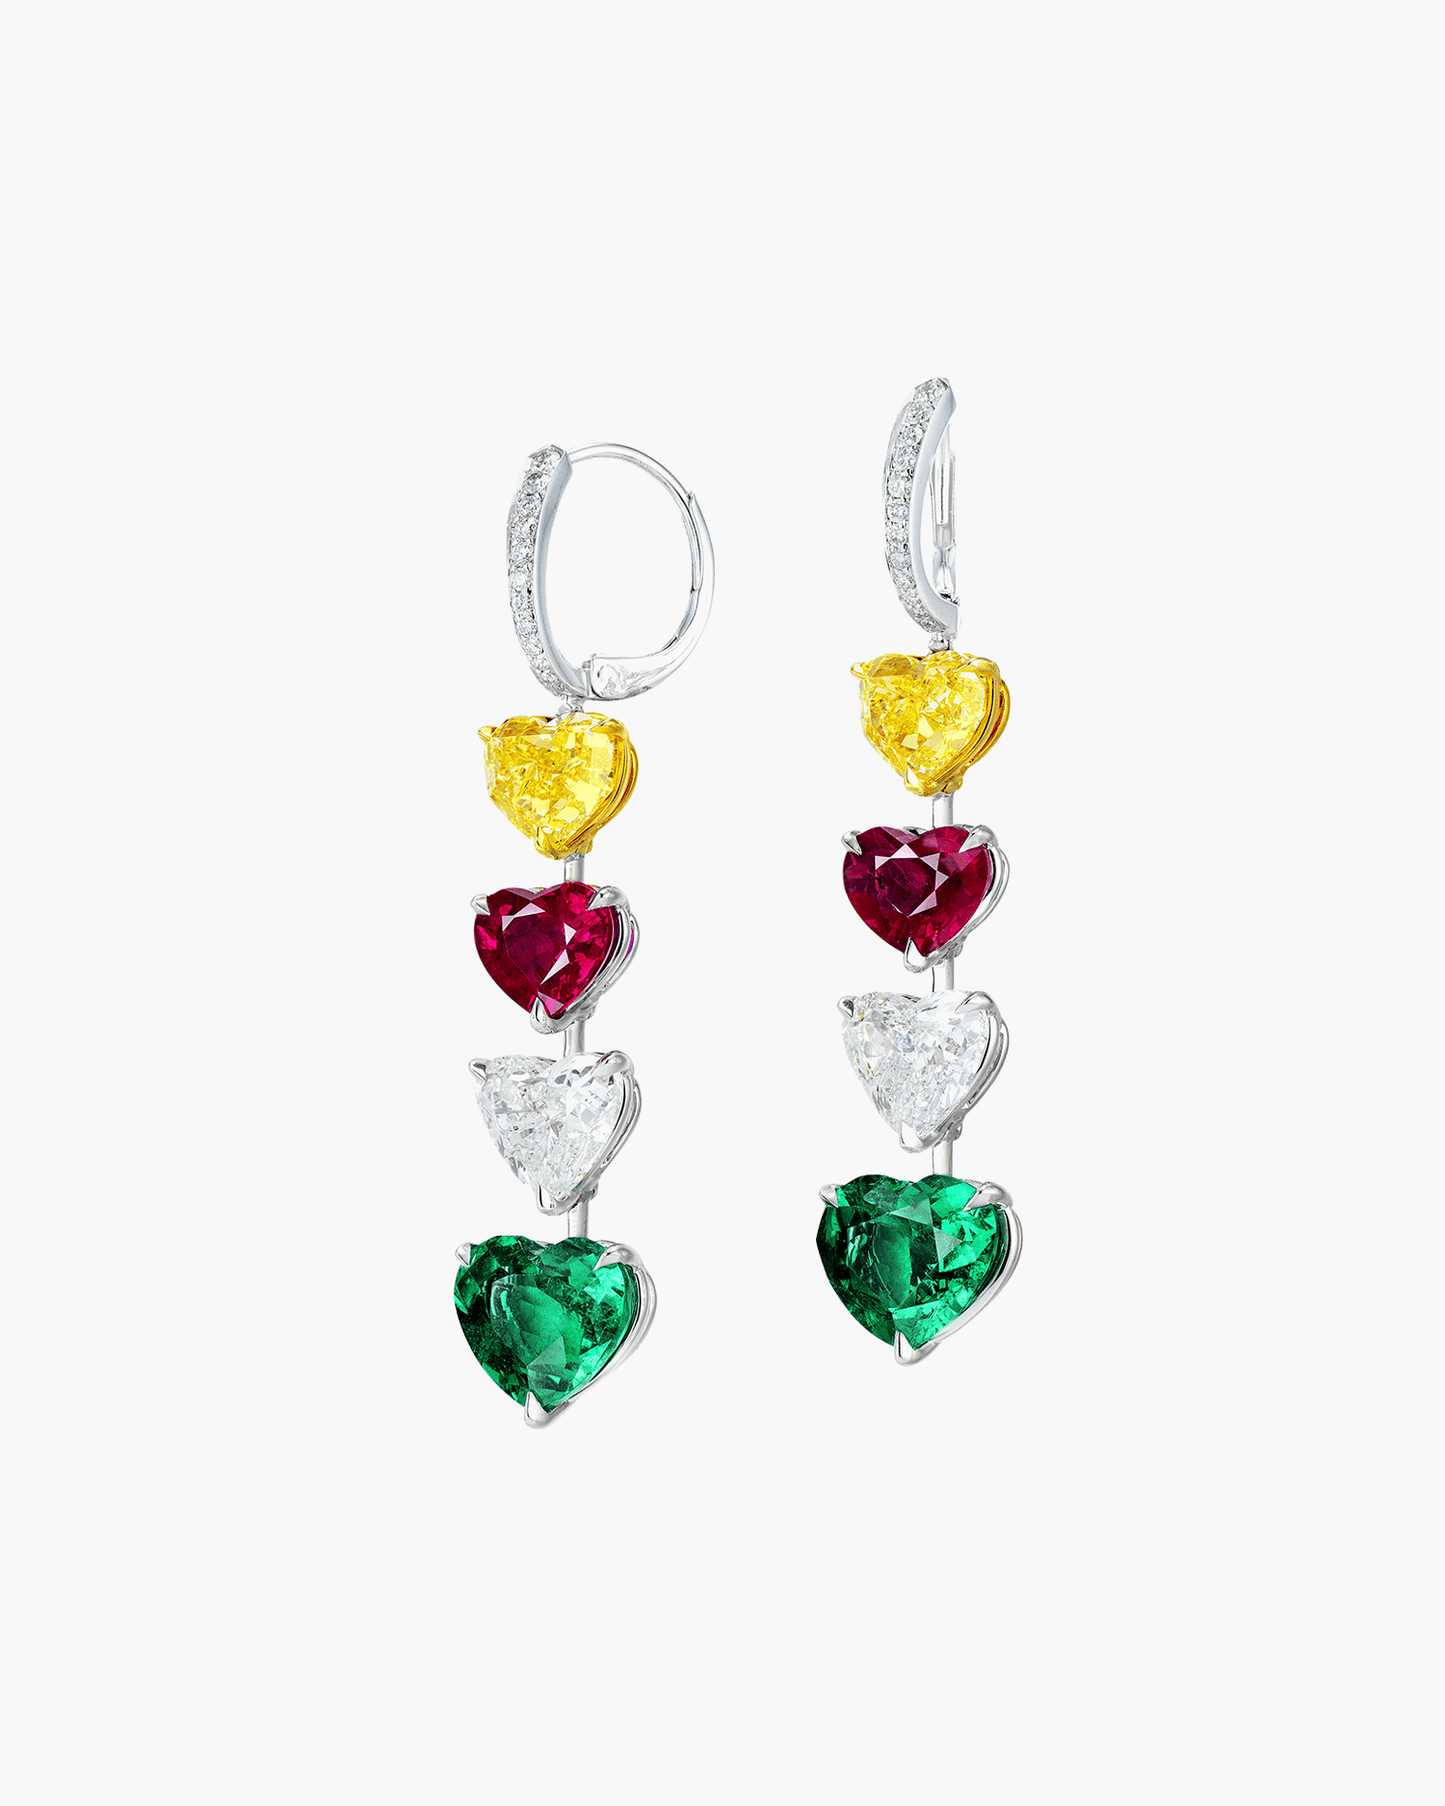 13.13 carat Heart Shape Emerald, Ruby, White and Yellow Diamond Earrings